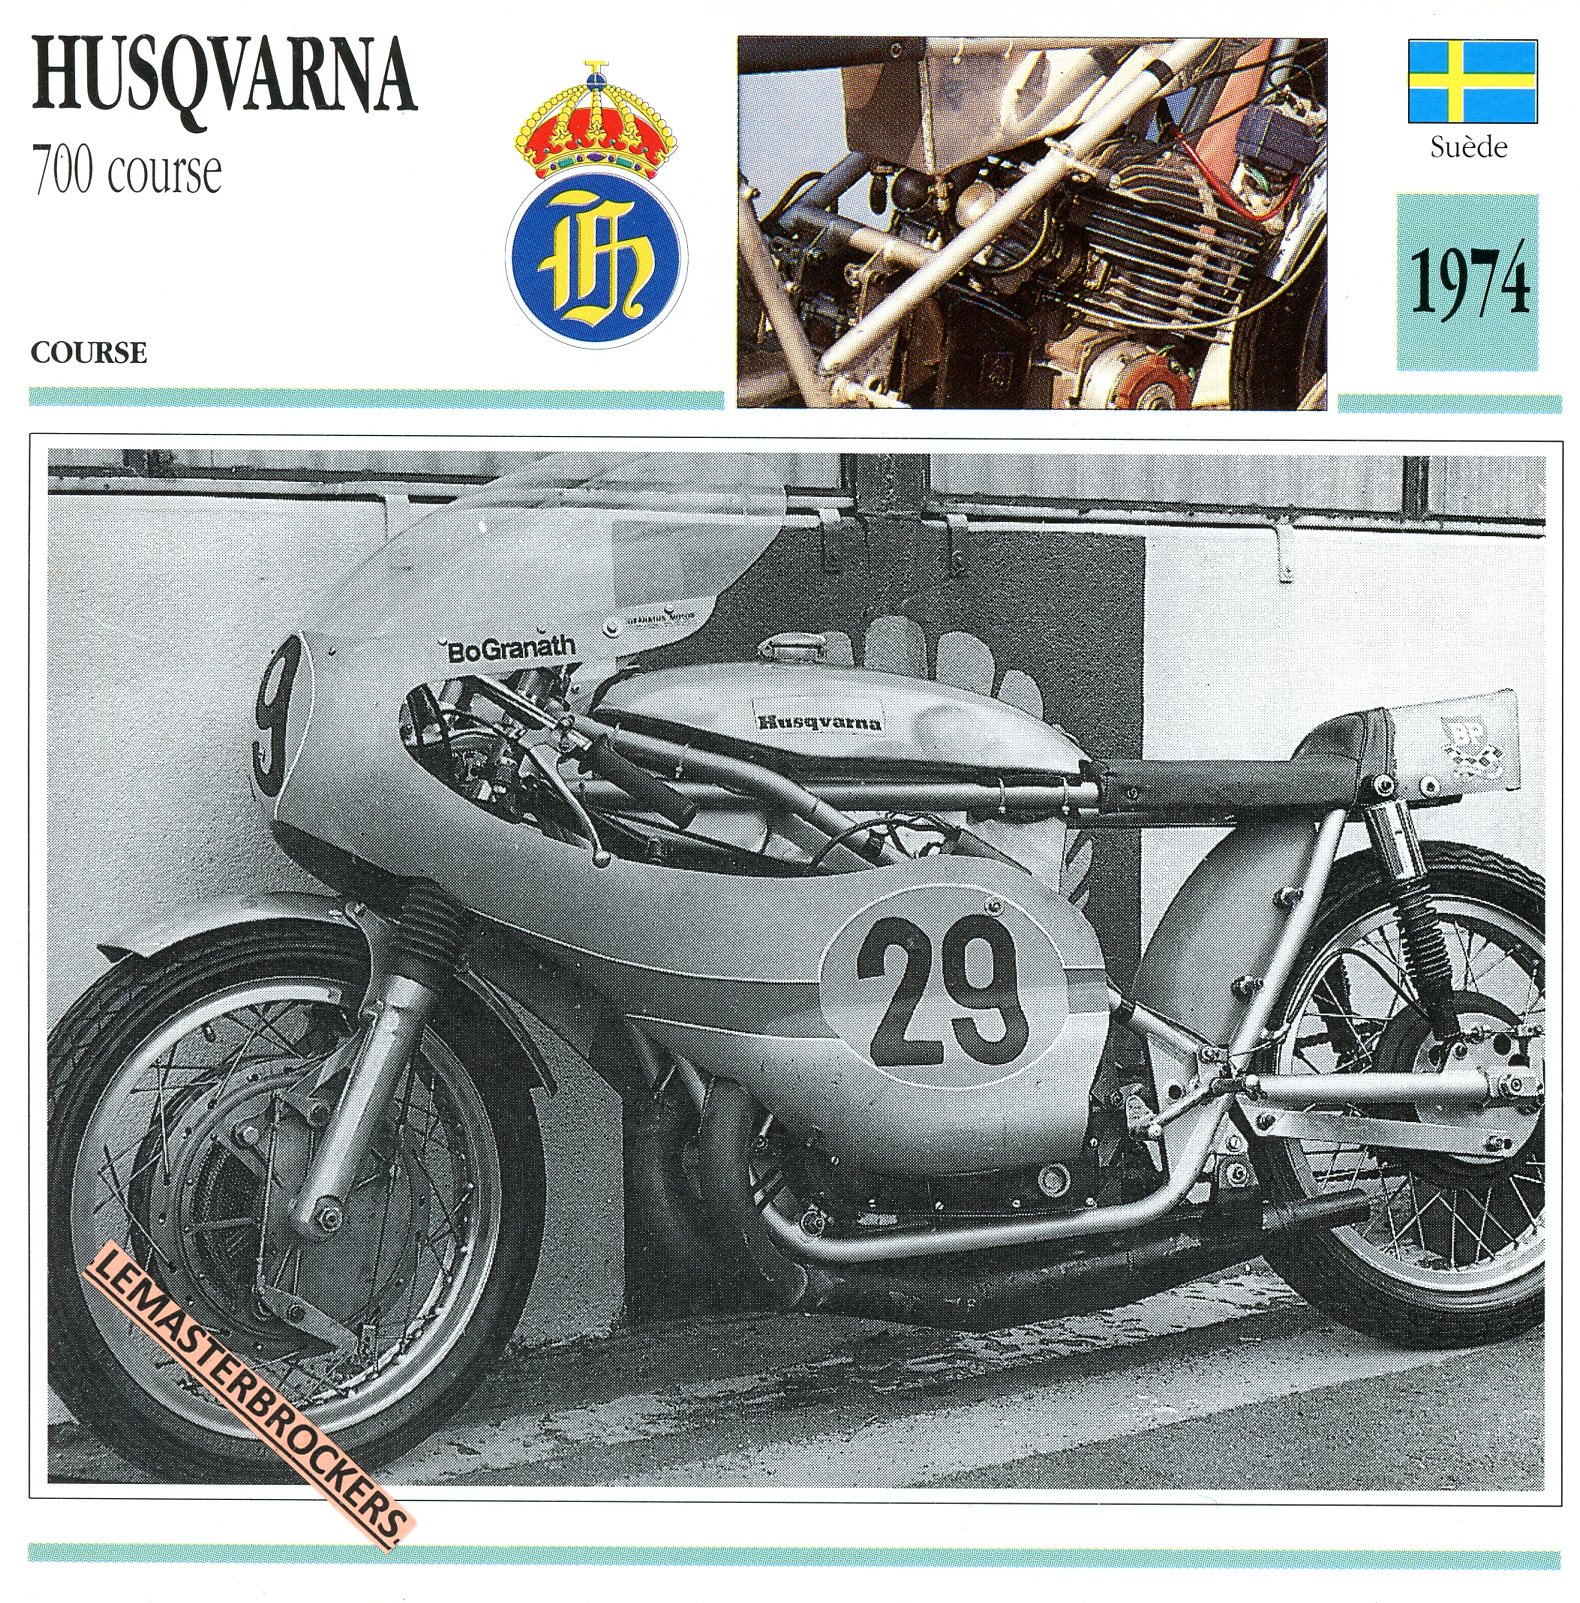 HUSQVARNA-700-COURSE-1974-FICHE-MOTO-LEMASTERBROCKERS